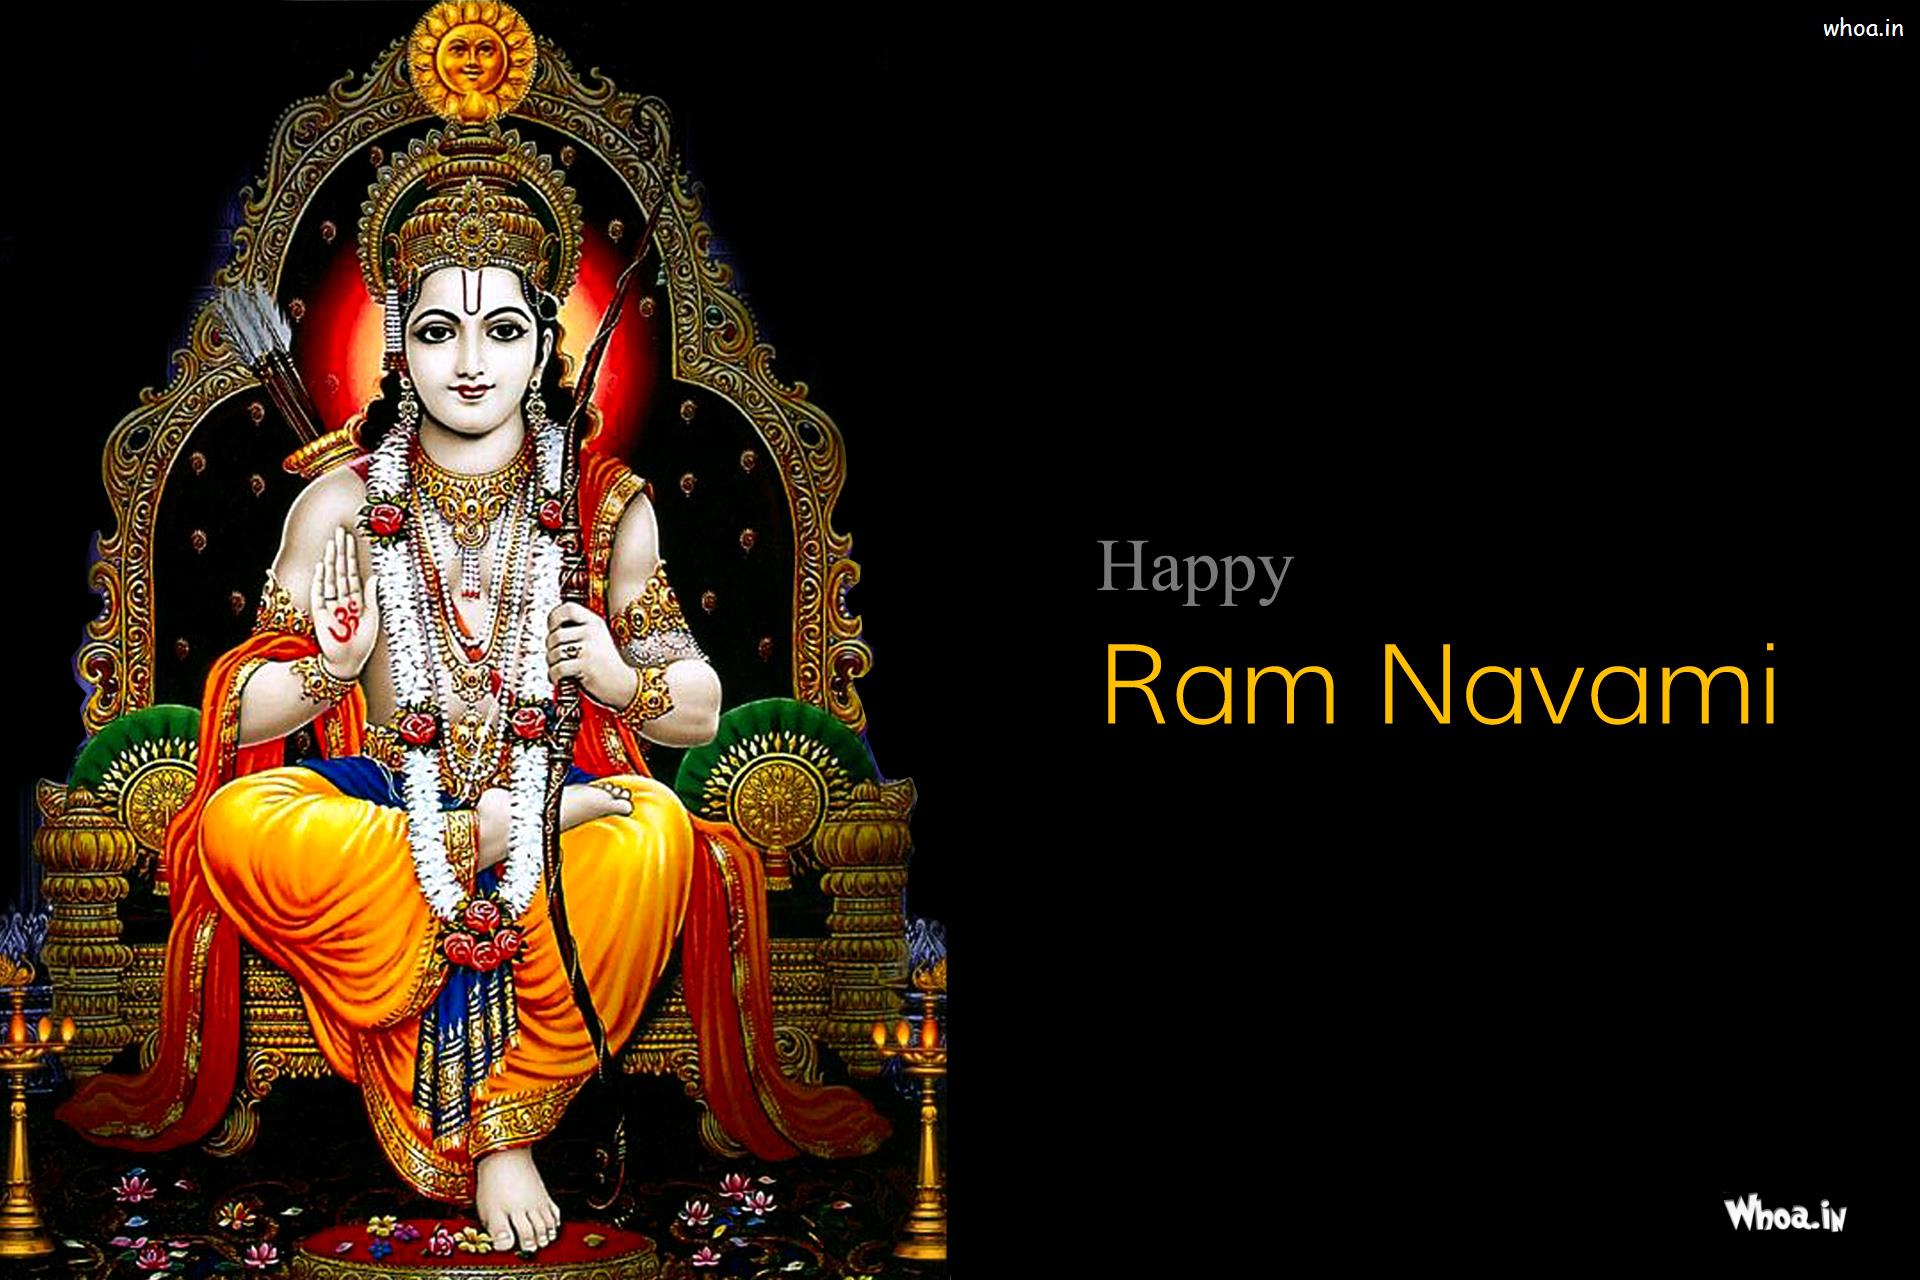 3233 Ram Navami Poster Images Stock Photos  Vectors  Shutterstock